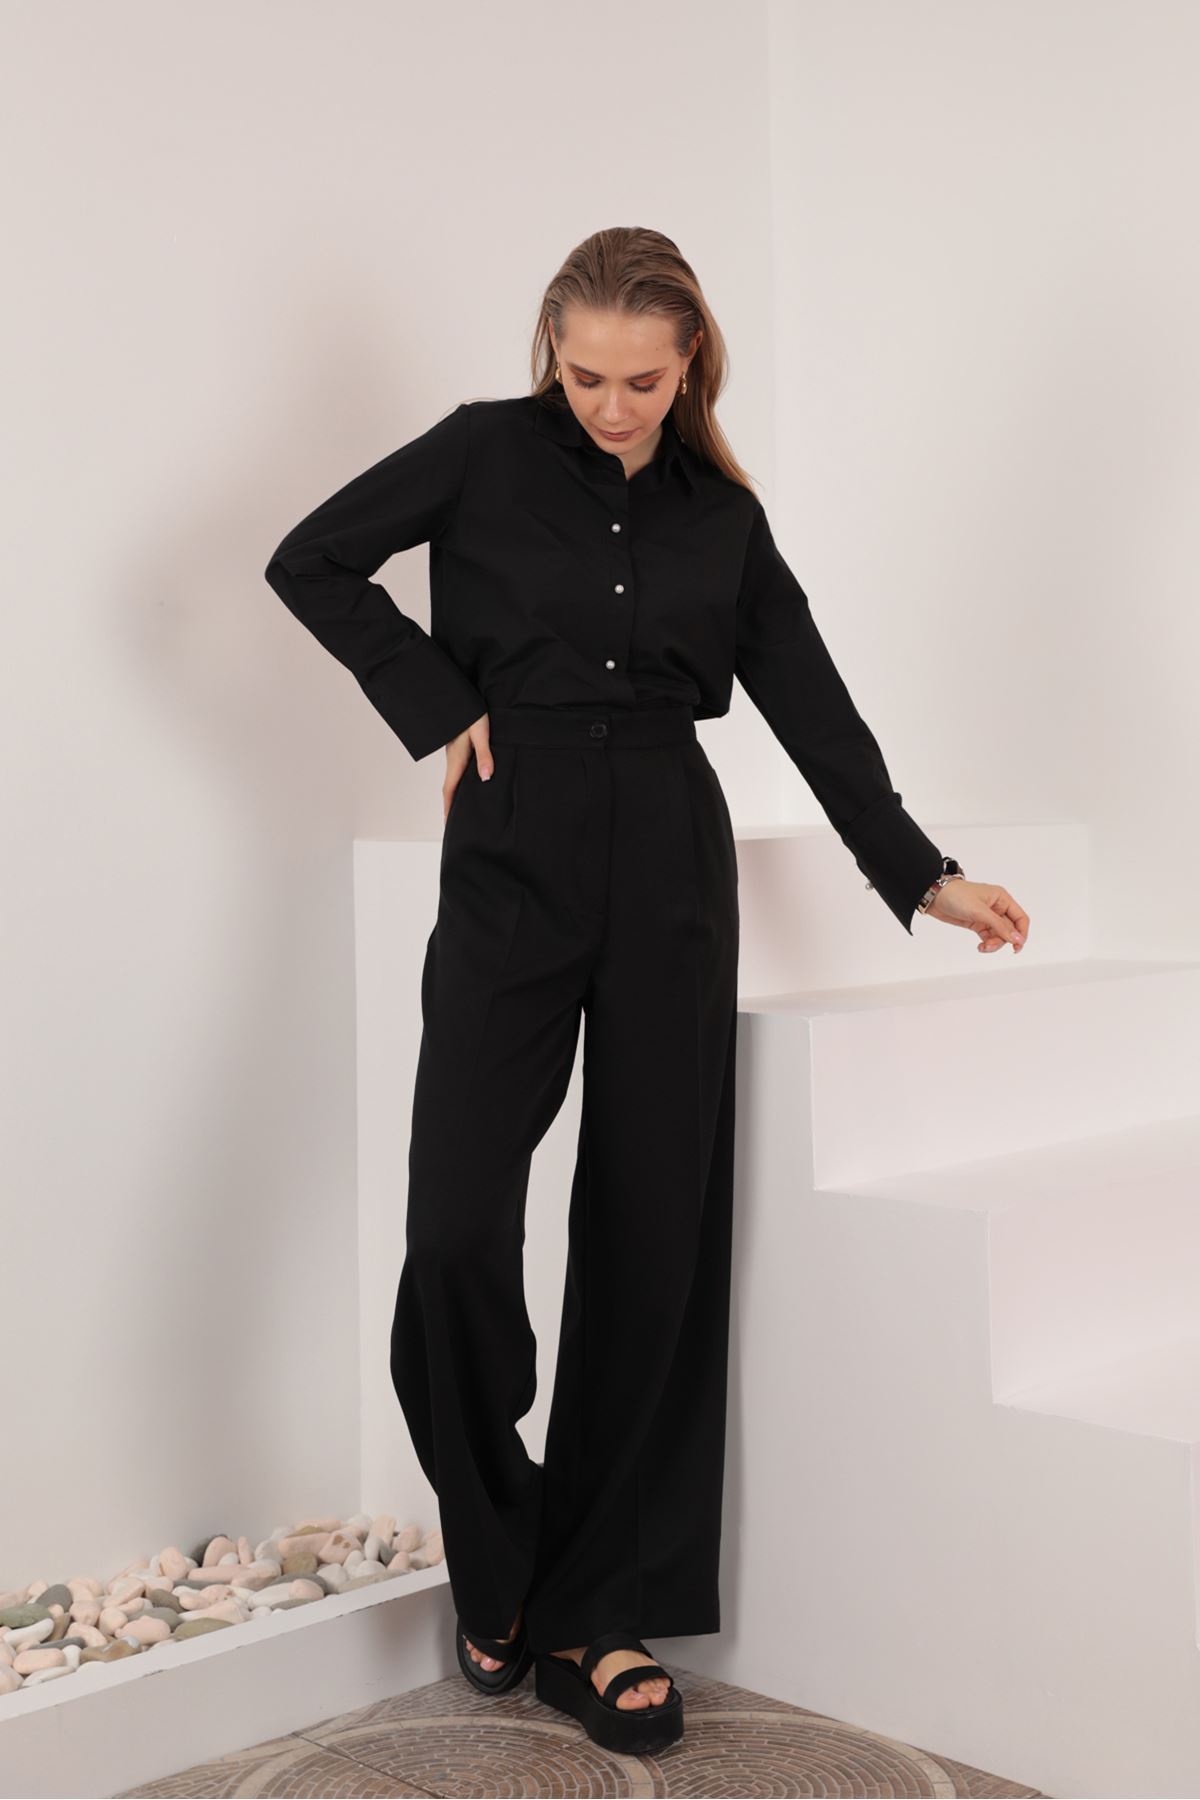 Soft Kumaş Crop Kadın İnci Düğme Detay Gömlek-Siyah